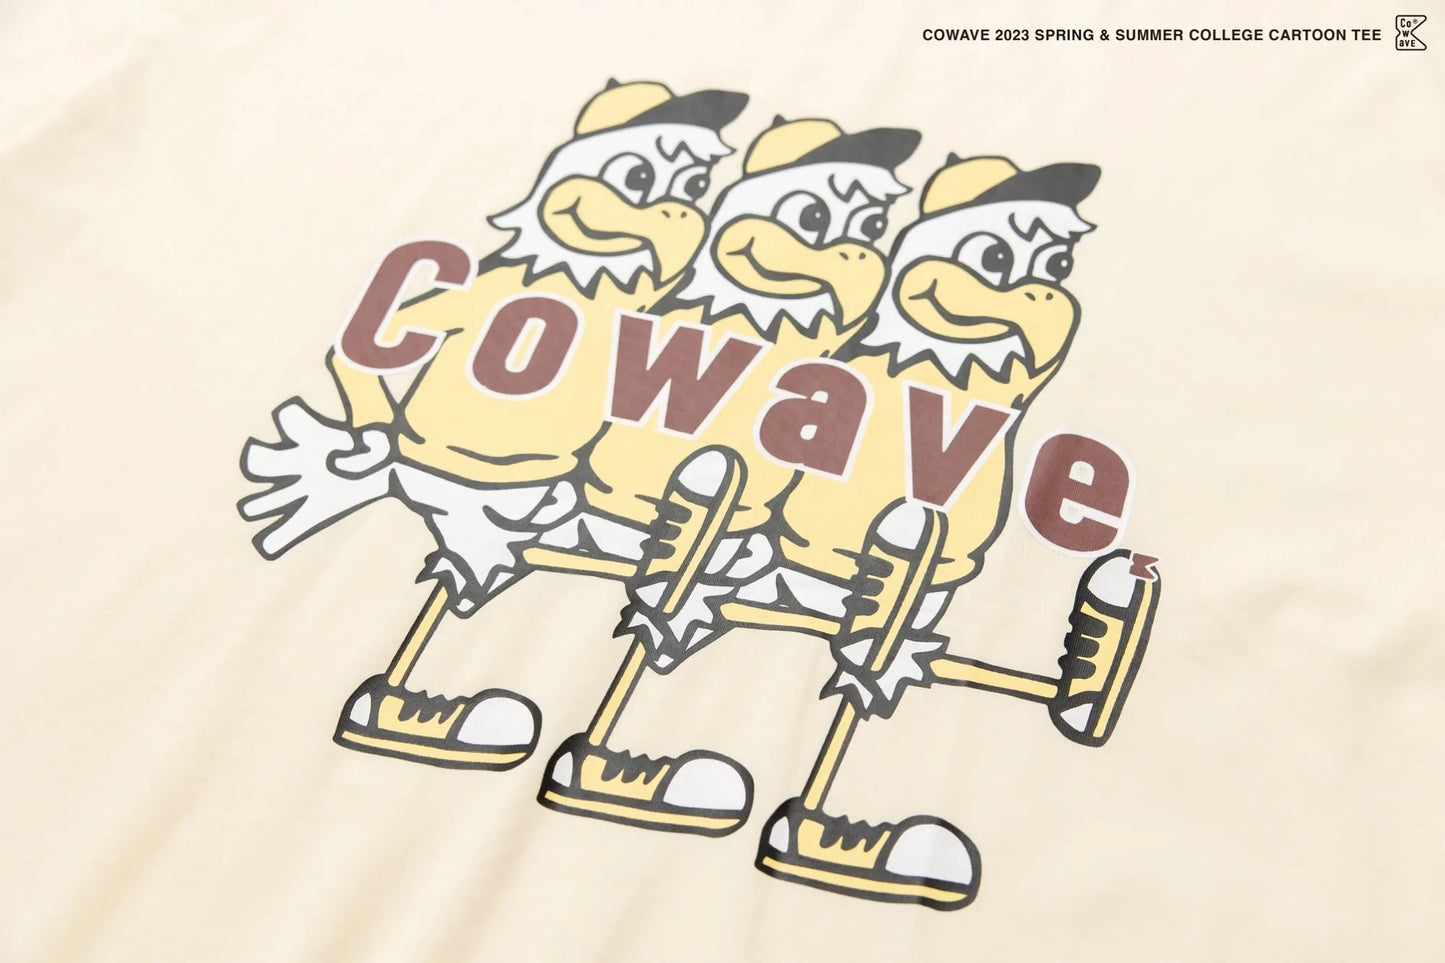 Cowave 2023 Spring & Summer College Cartoon tee 米白